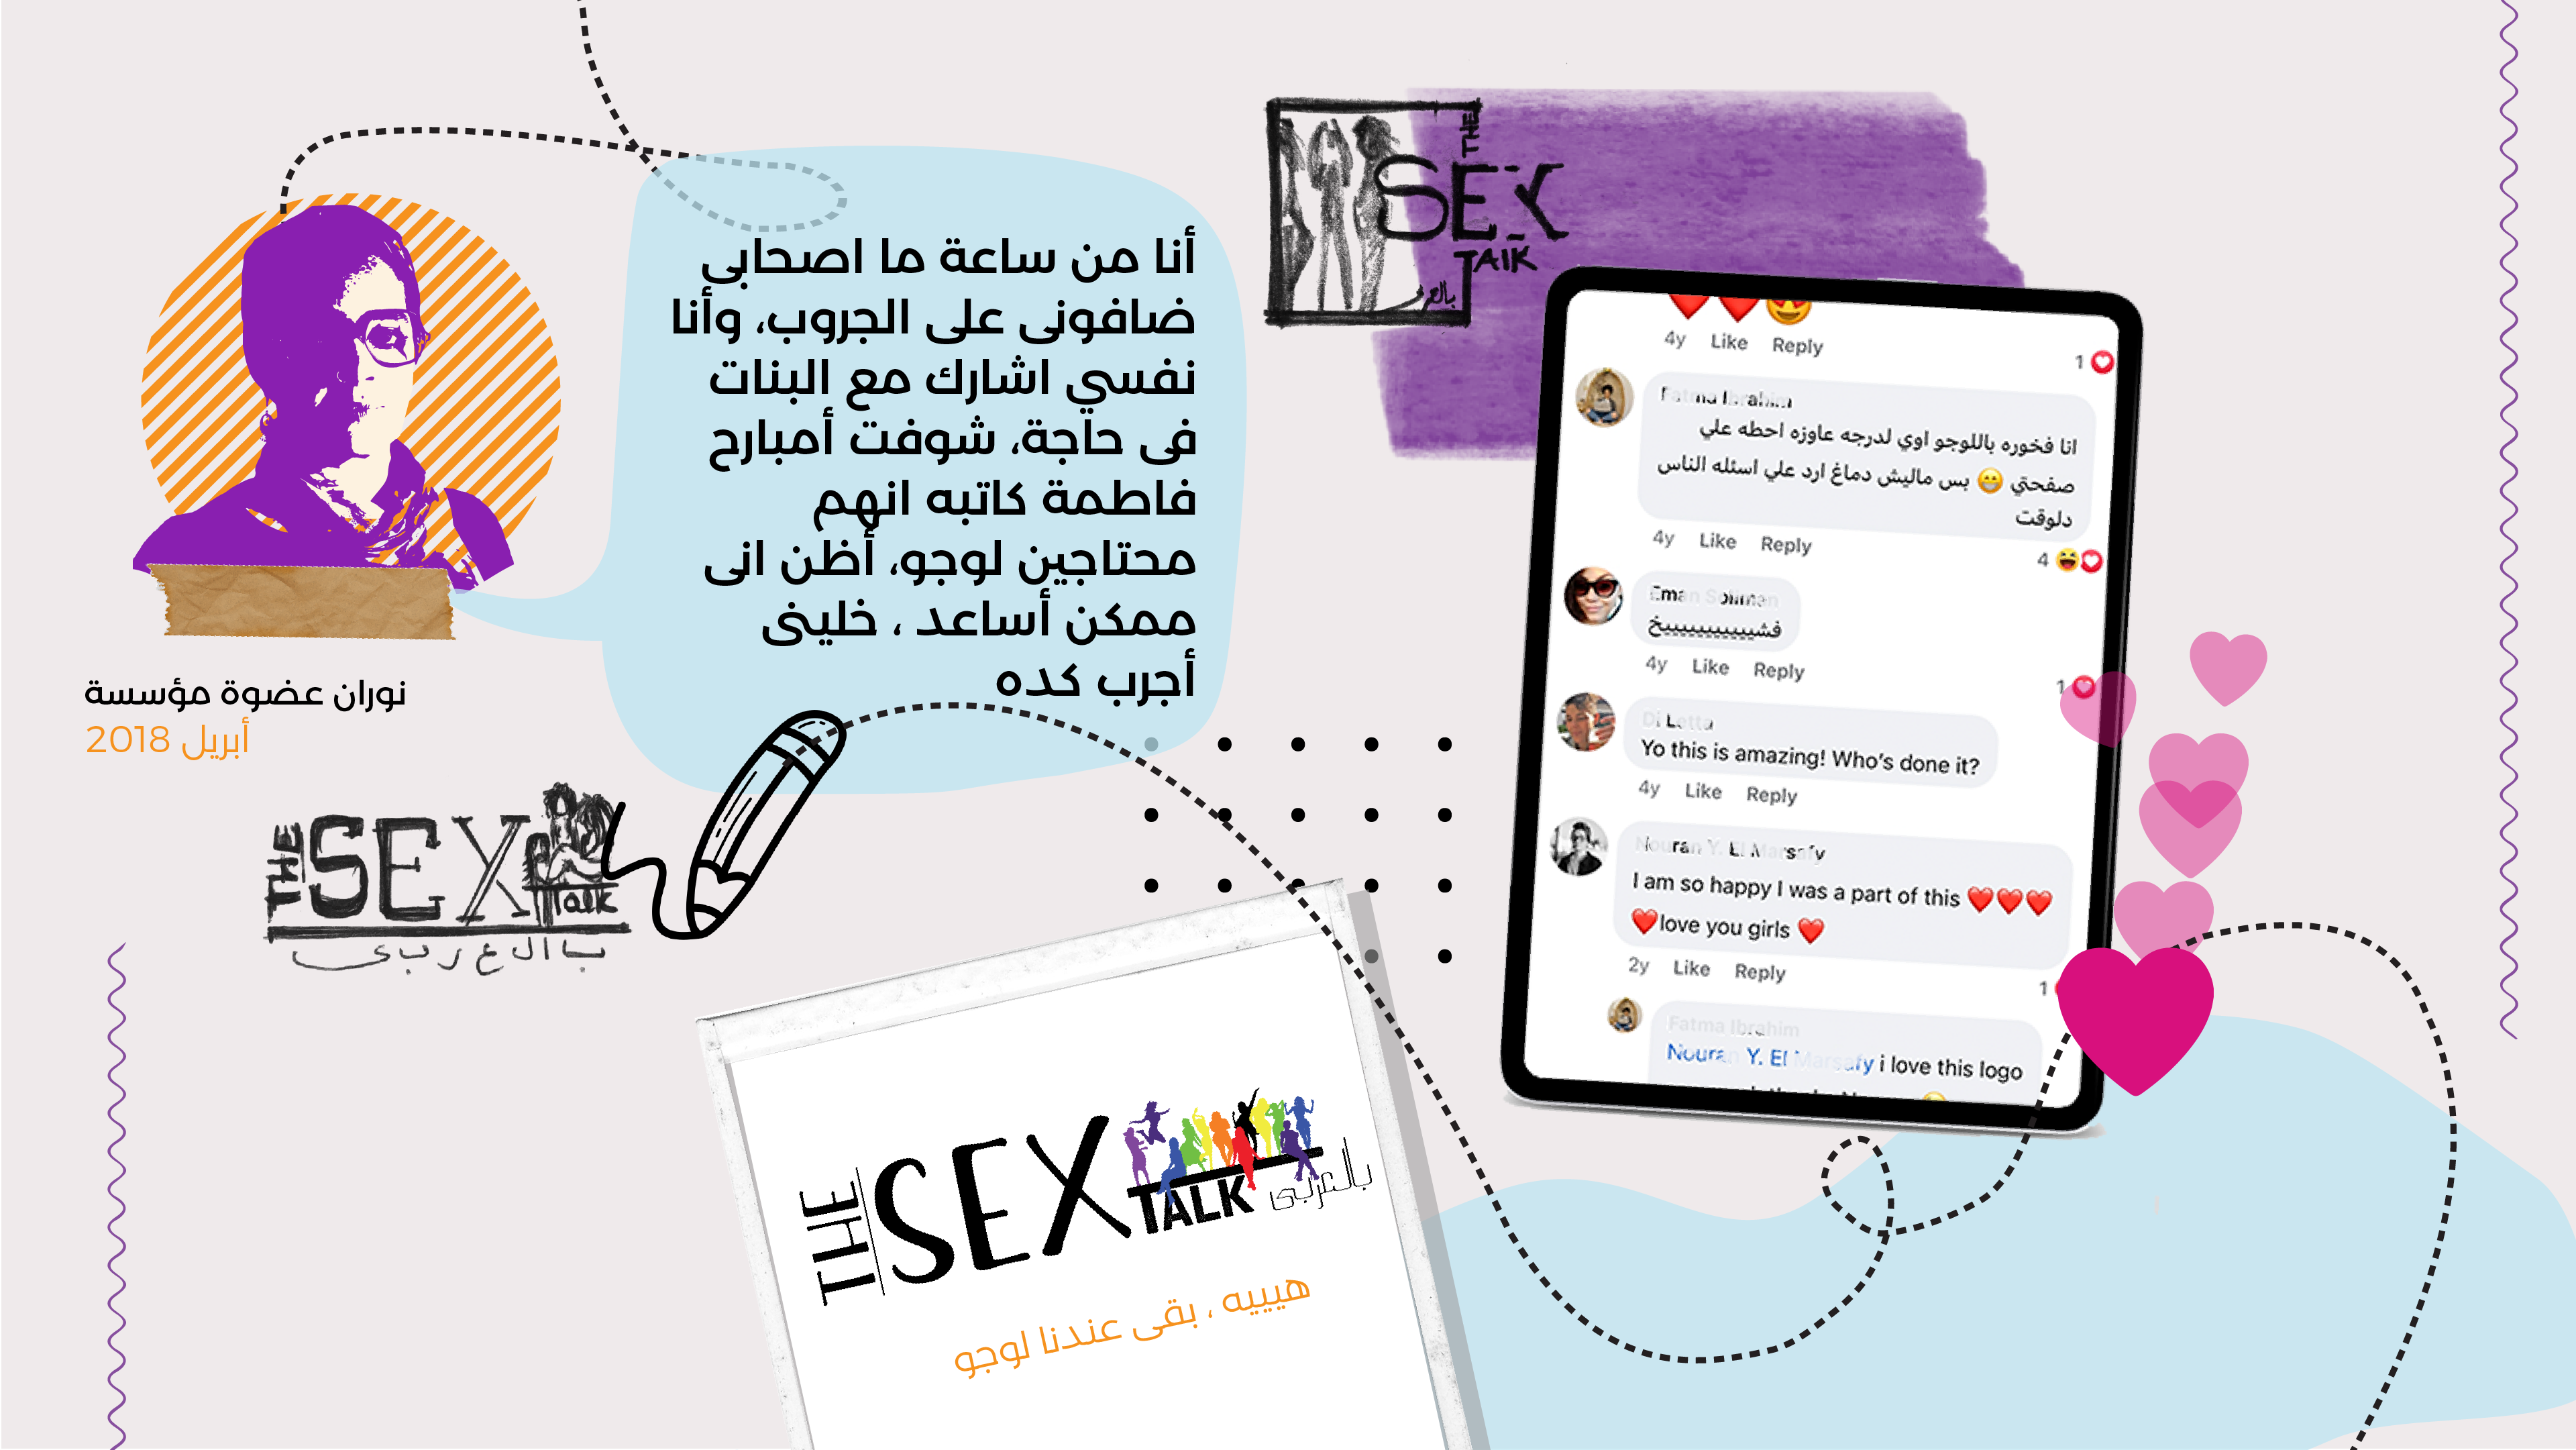 Photo from The Sex Talk Arabic